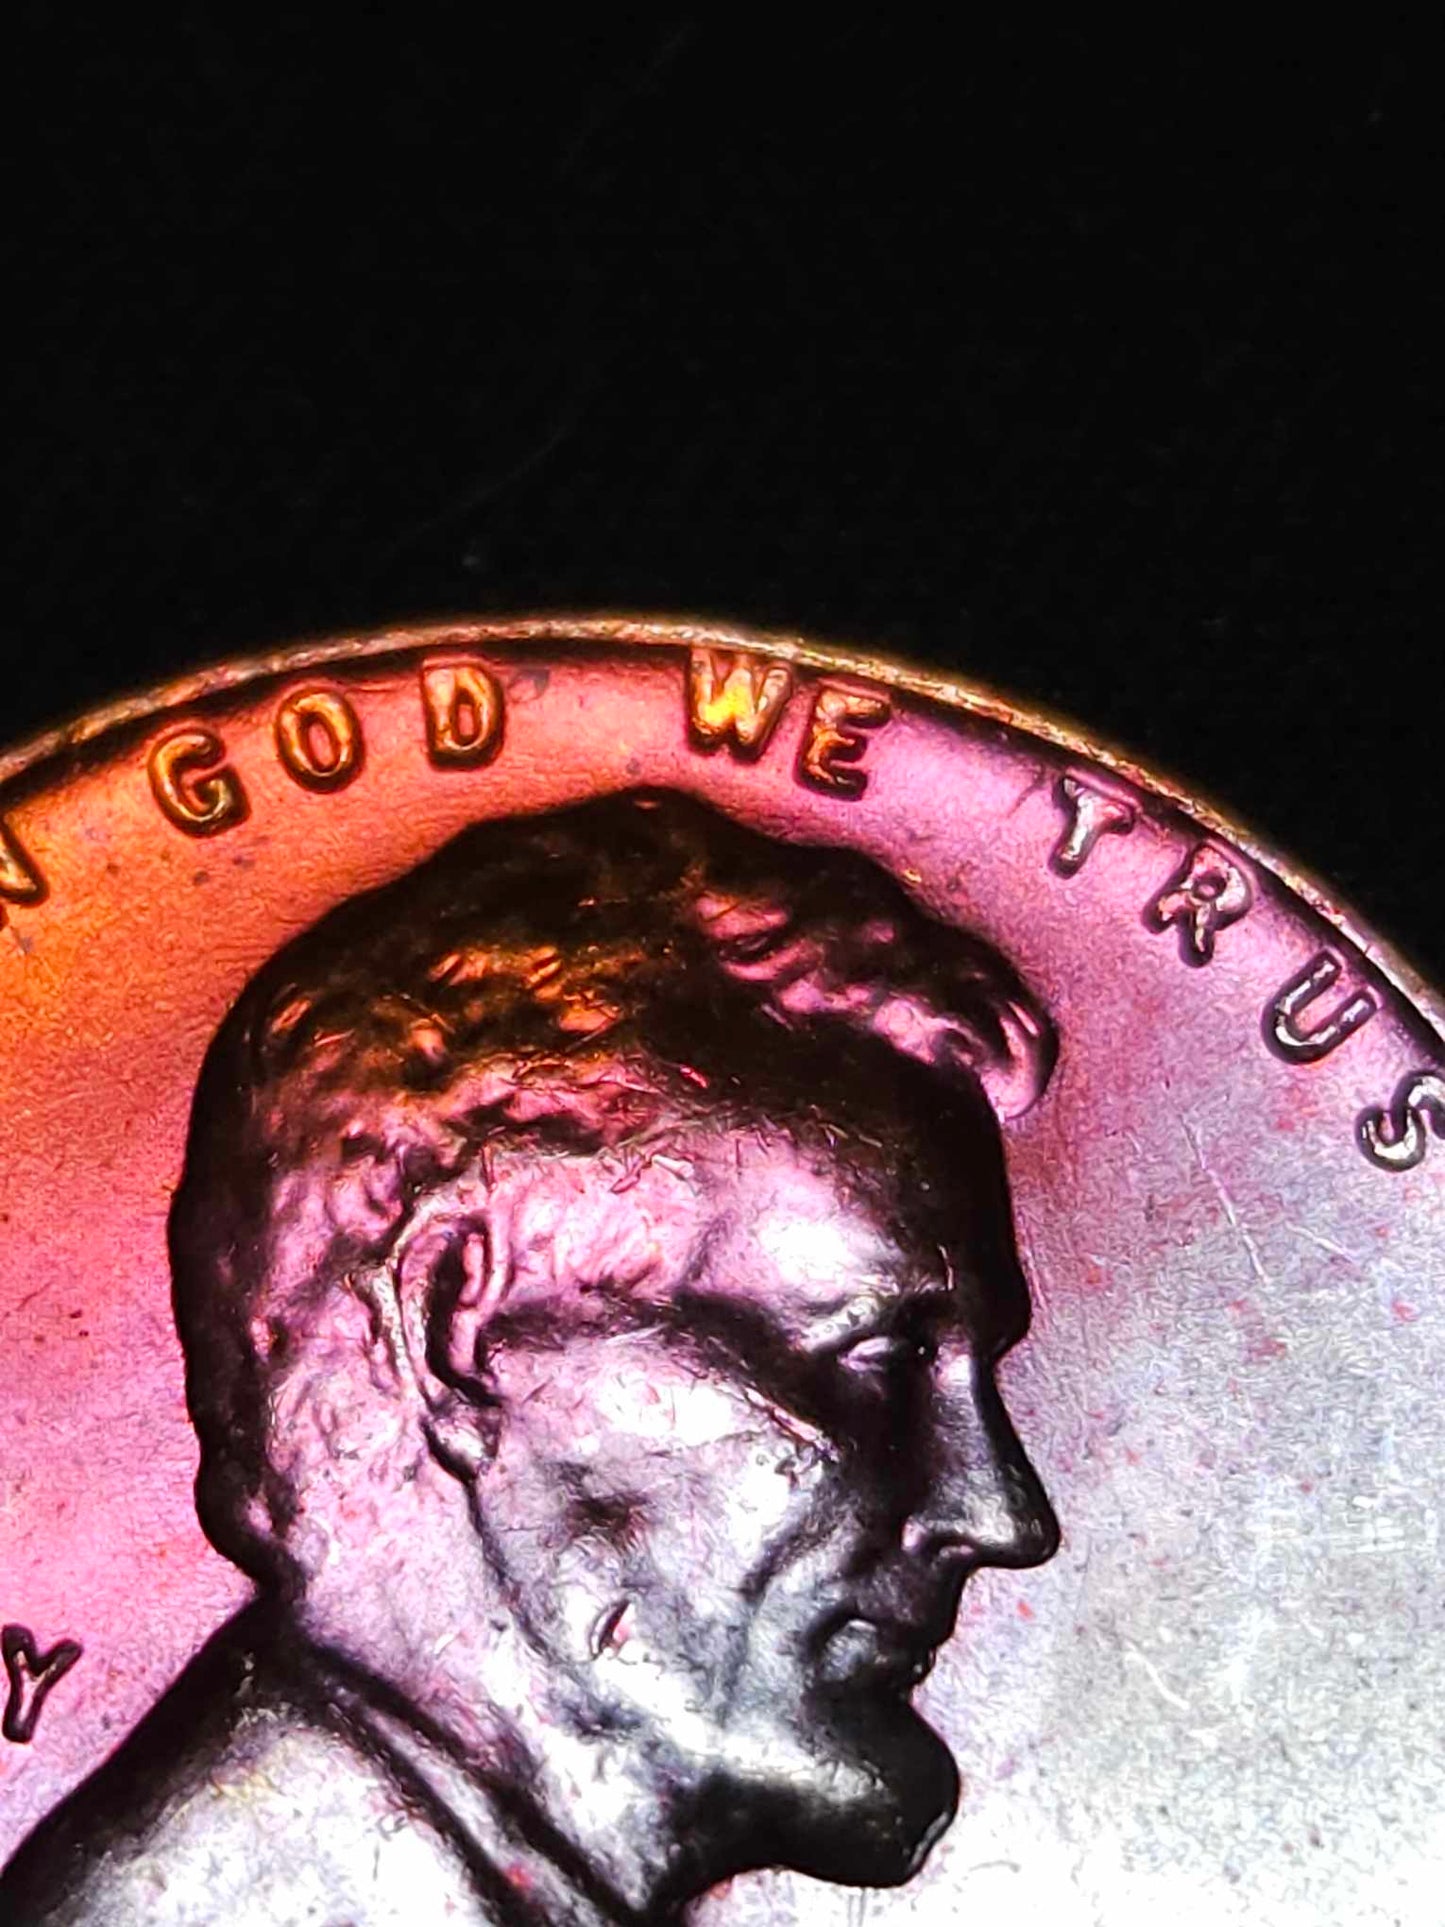 1959 Lincoln Memorial Cent Bu Errors & Oddities